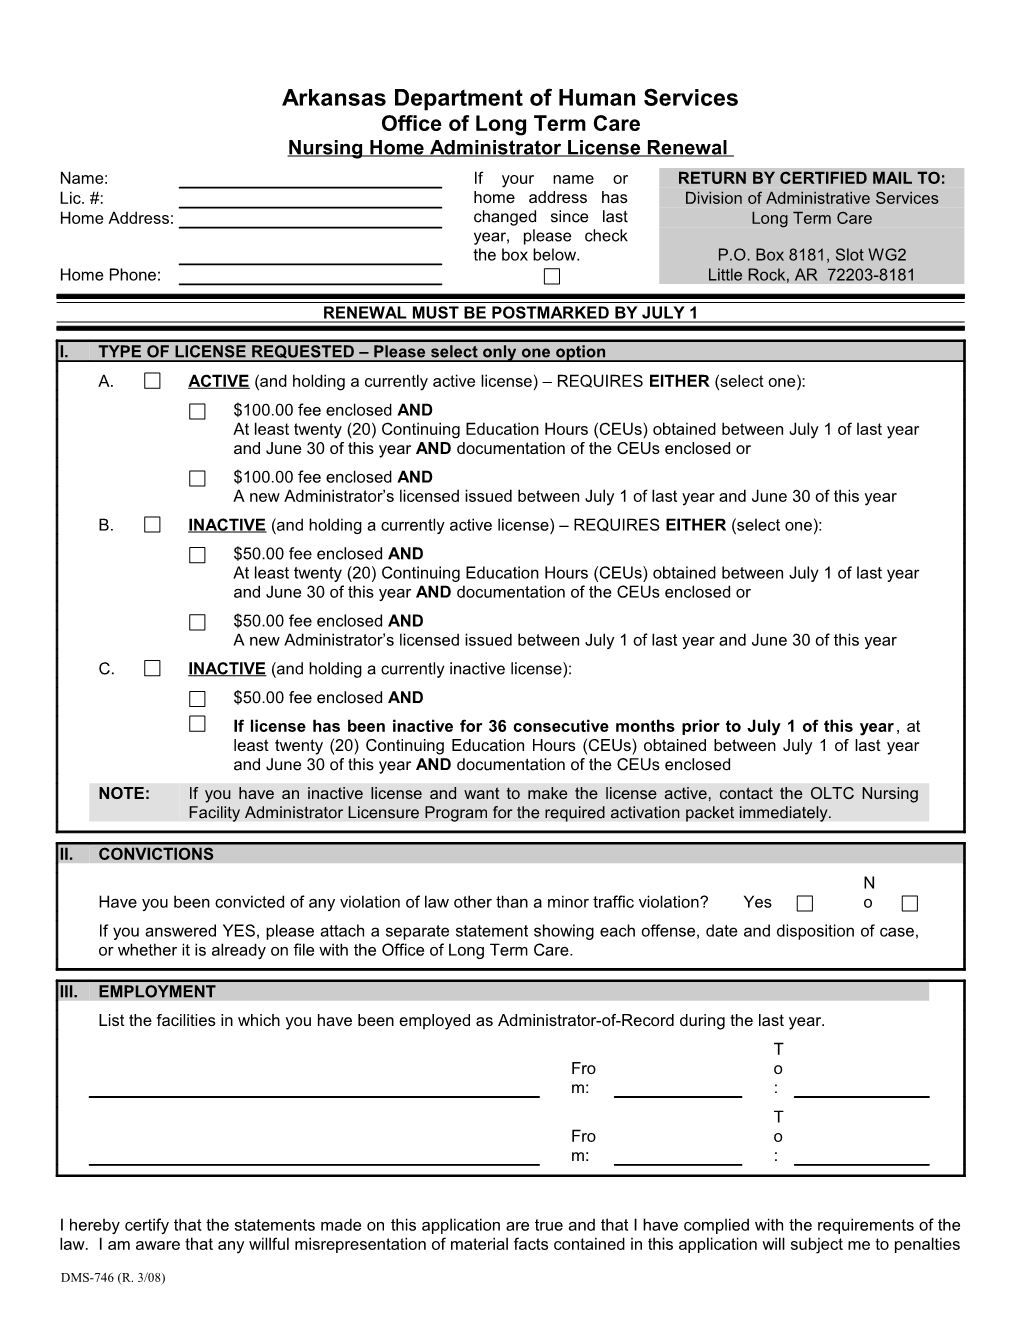 Nursing Home Administrators Administrator License Renewal Form